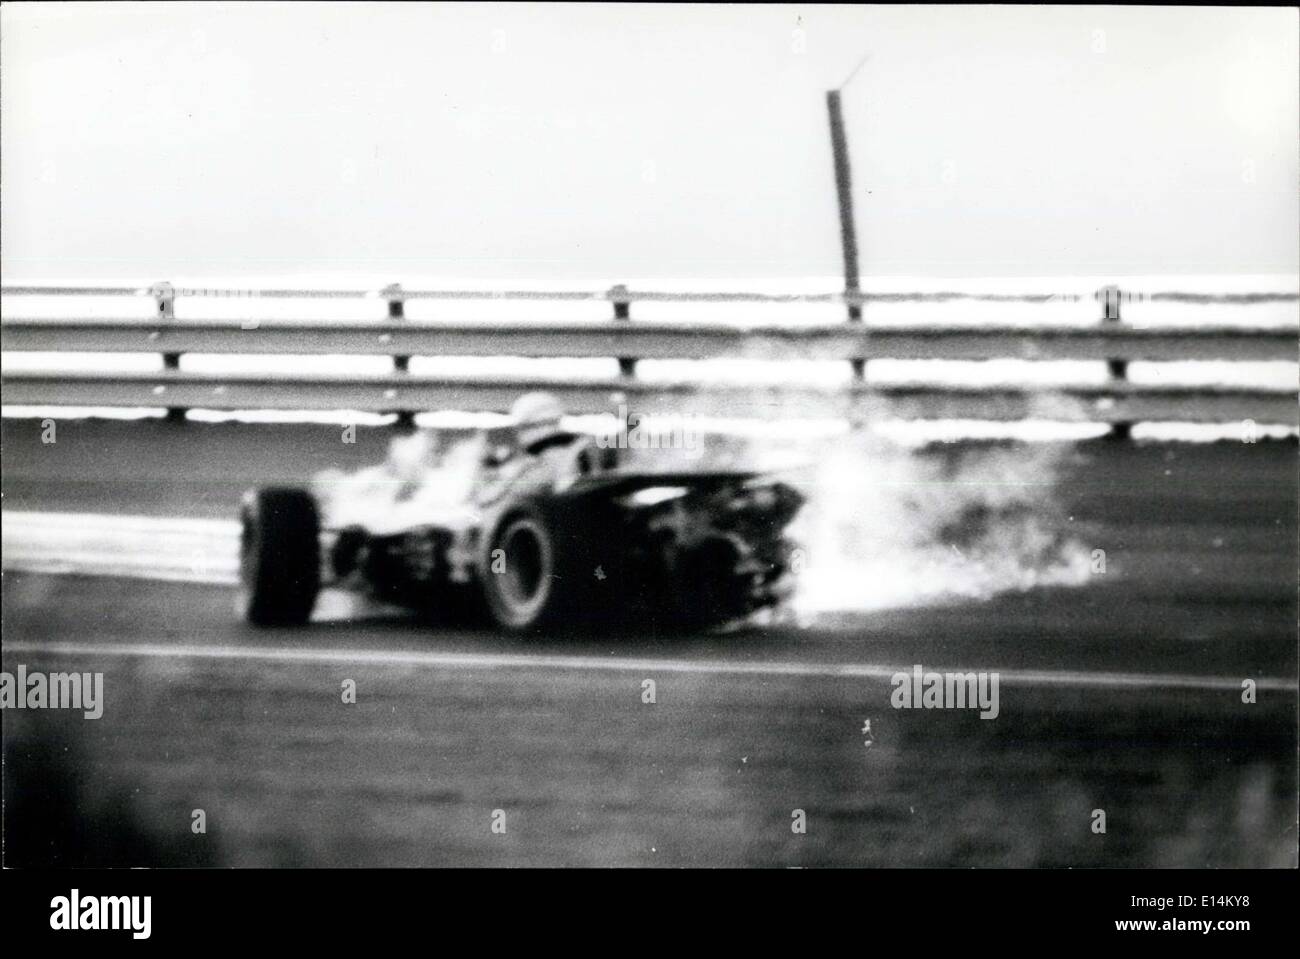 Apr. 05, 2012 - American car racer Bantley Warrens abbandonando il suo ardente auto a Rafaela, Argentina gara. Foto Stock